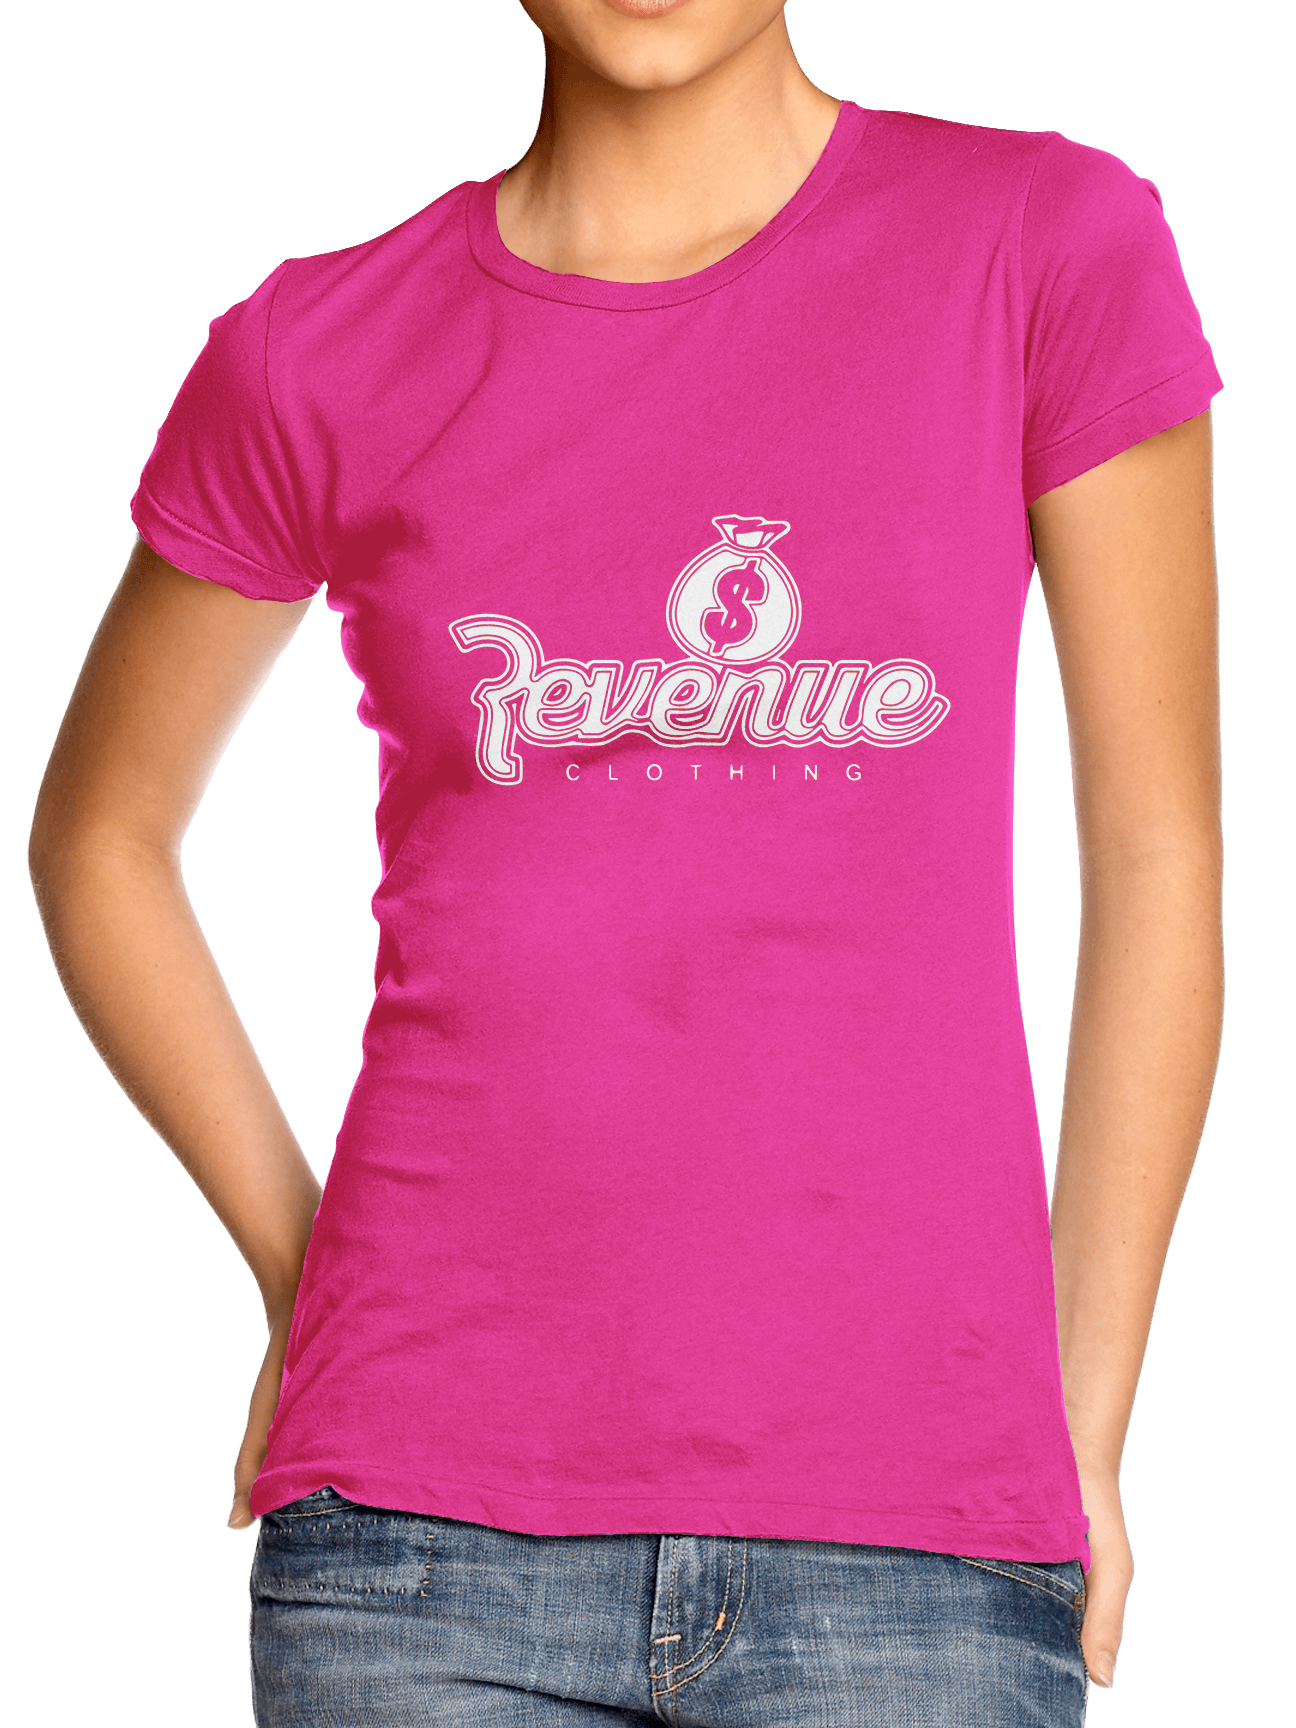 Pink Clothing Logo - Revenue Clothing Logo Pink Tee